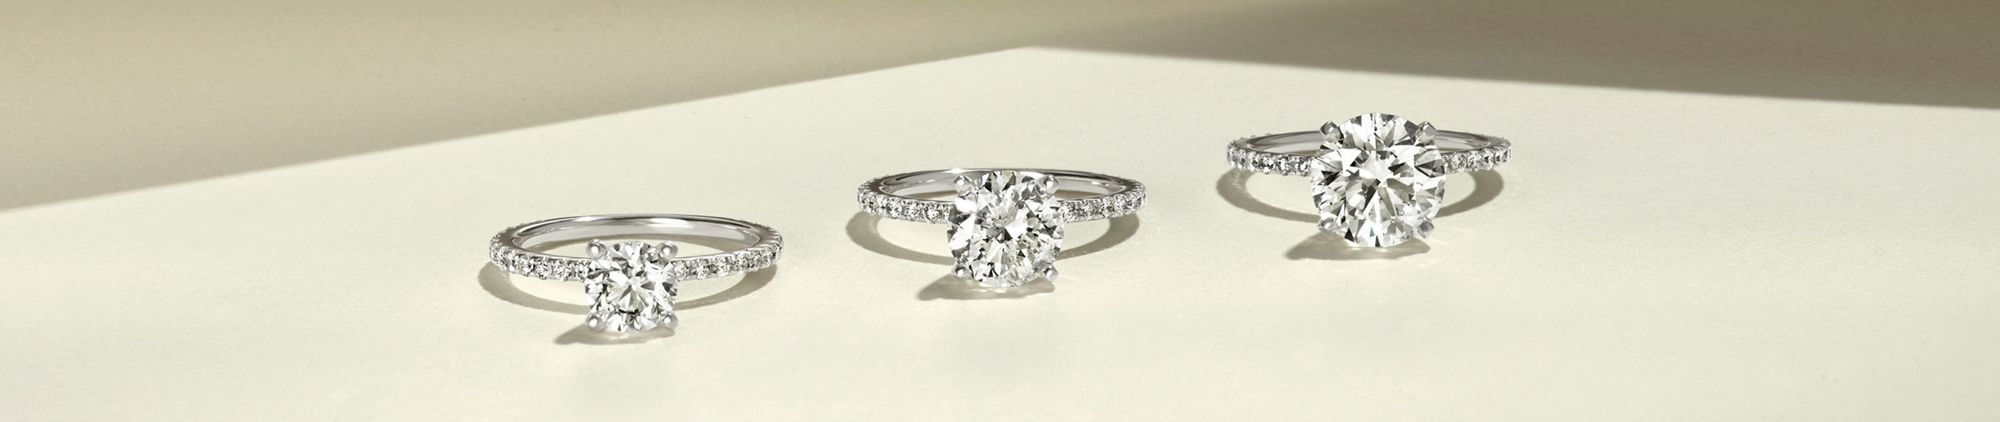 Desktop image of three engagement rings